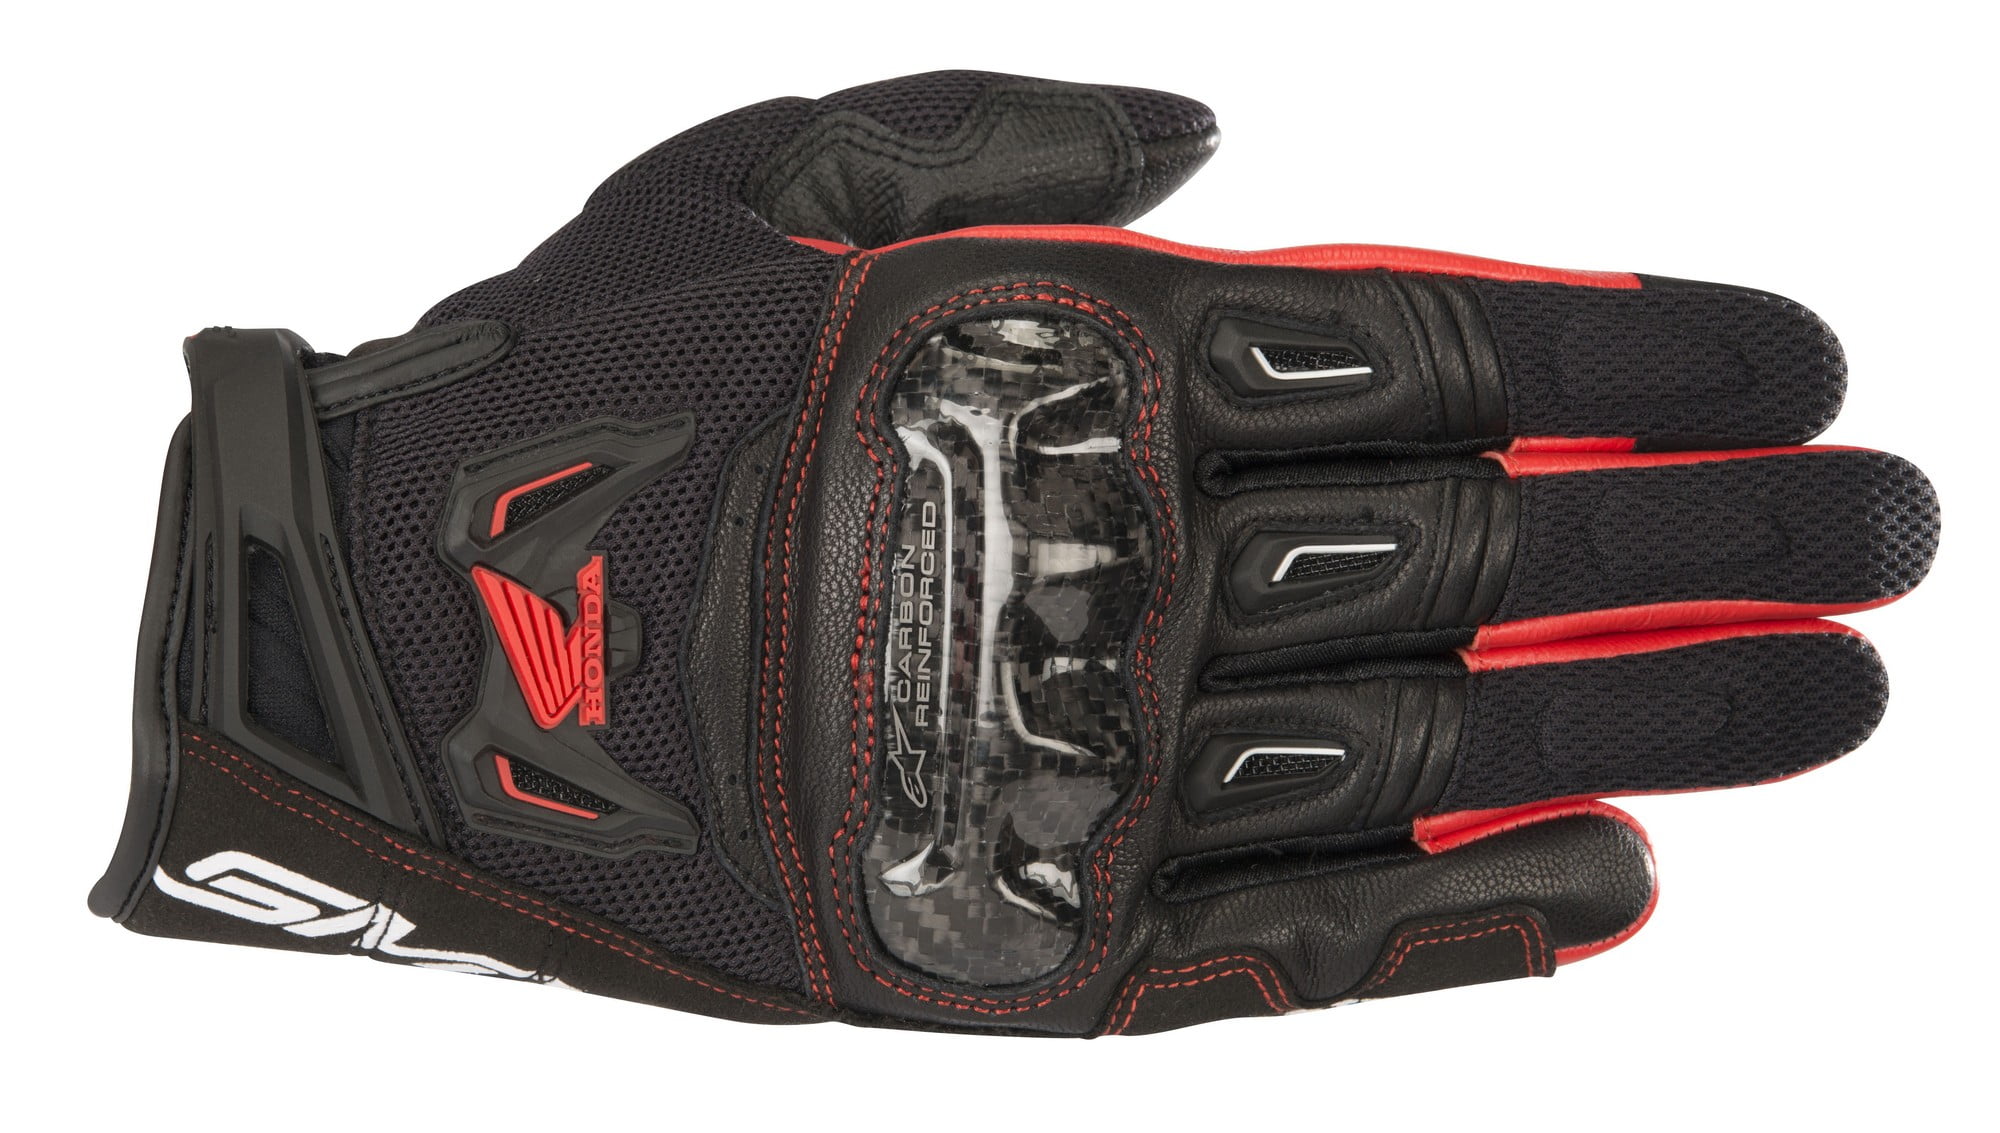 Motorcycle gloves Smx-2 Air Carbon V2 Glove Black Red Alpinestars